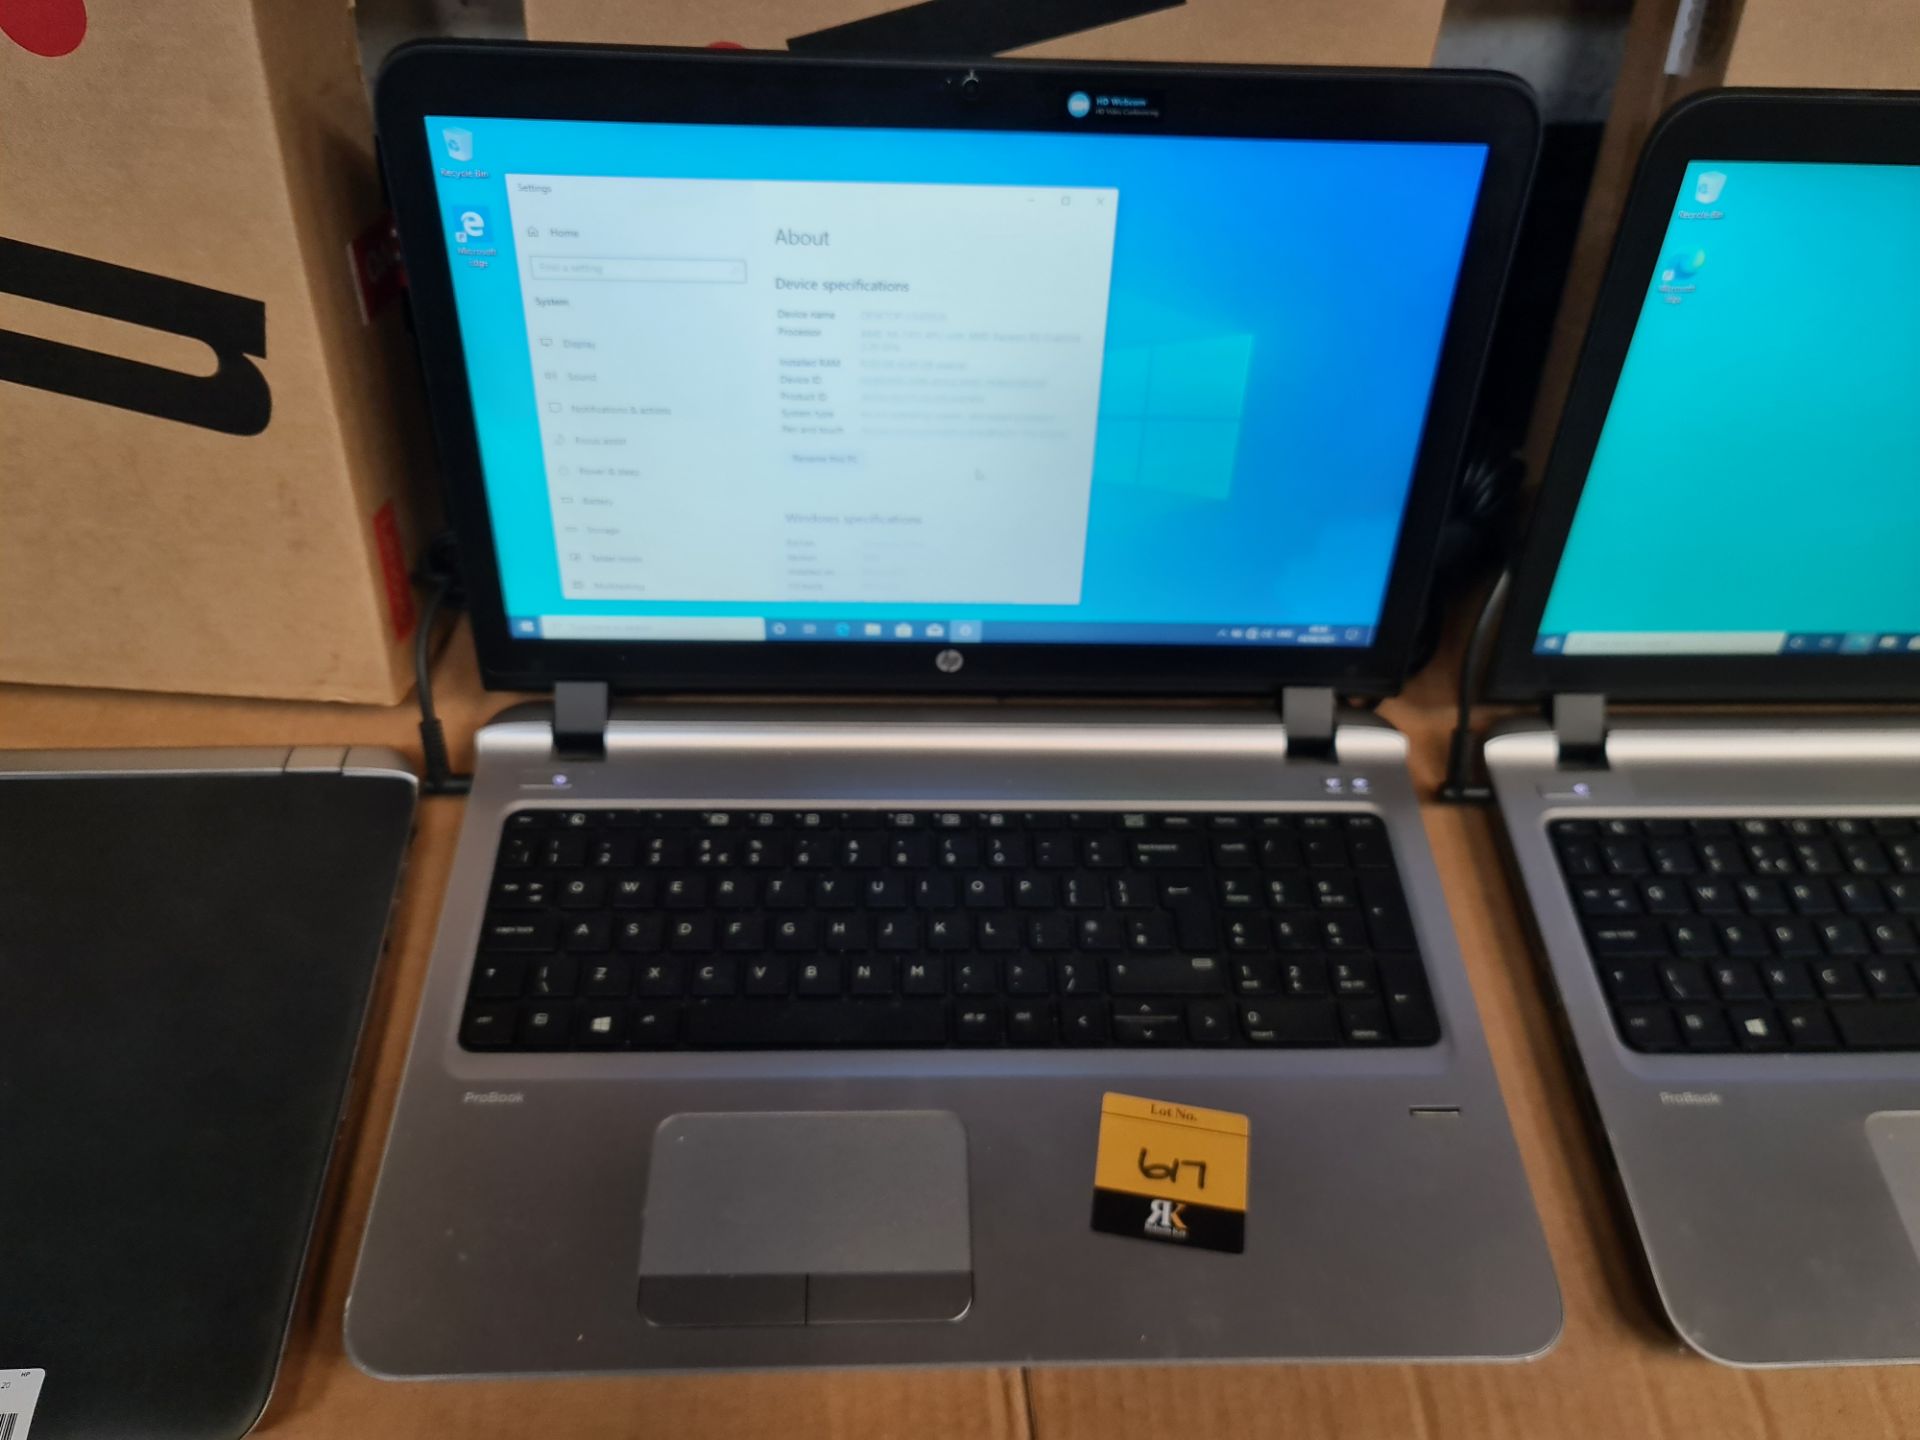 HP ProBook 455 G3 notebook computer with 15" widescreen display, HD webcam, AMD A8-7410 2.2GHz proce